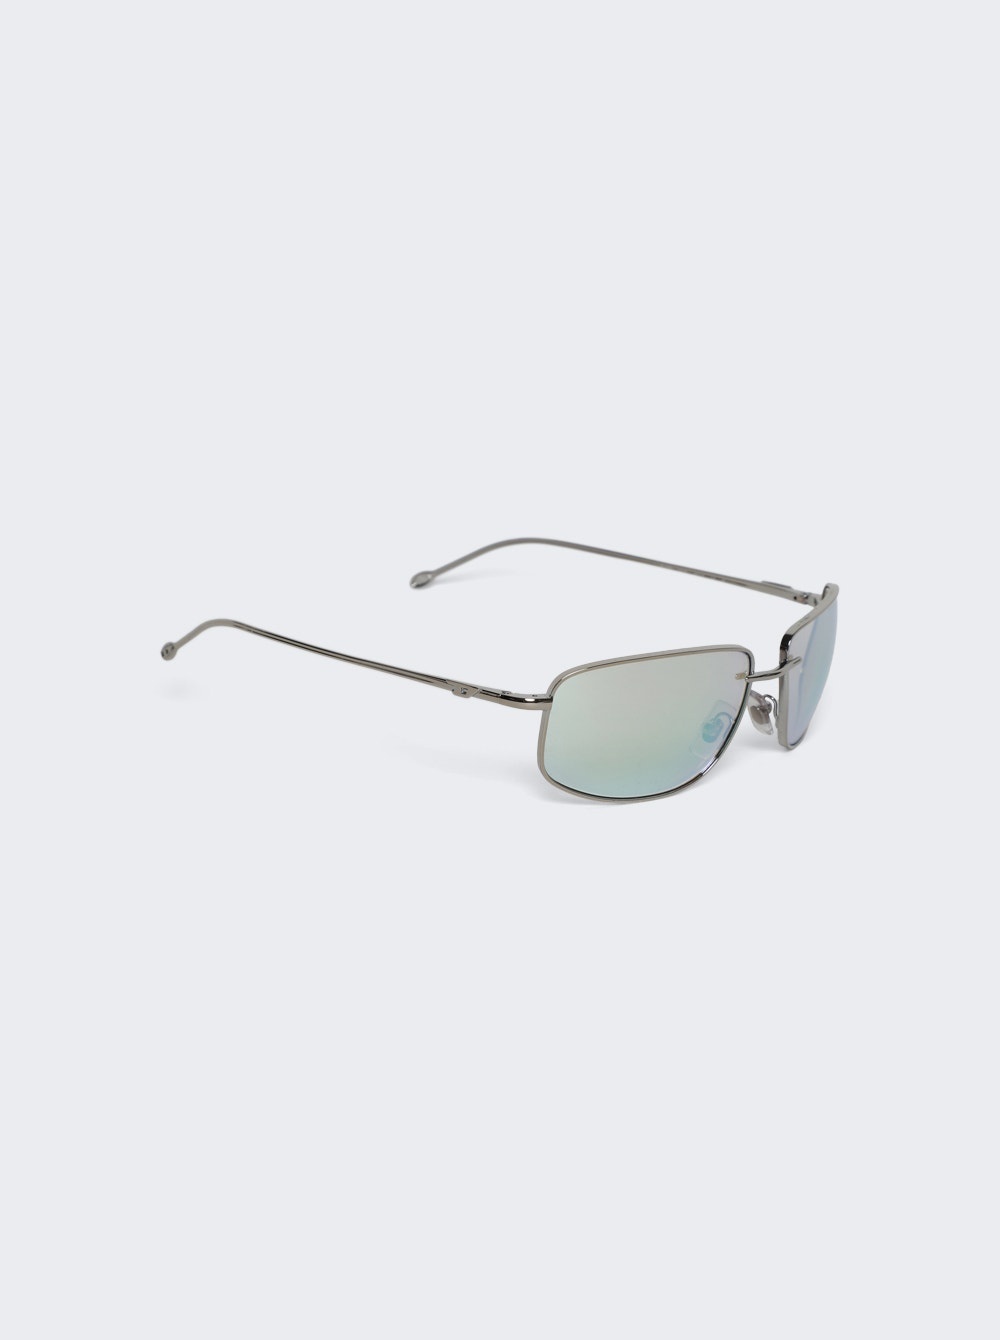 Lx1005 Sunglasses Shiny Silver - 4